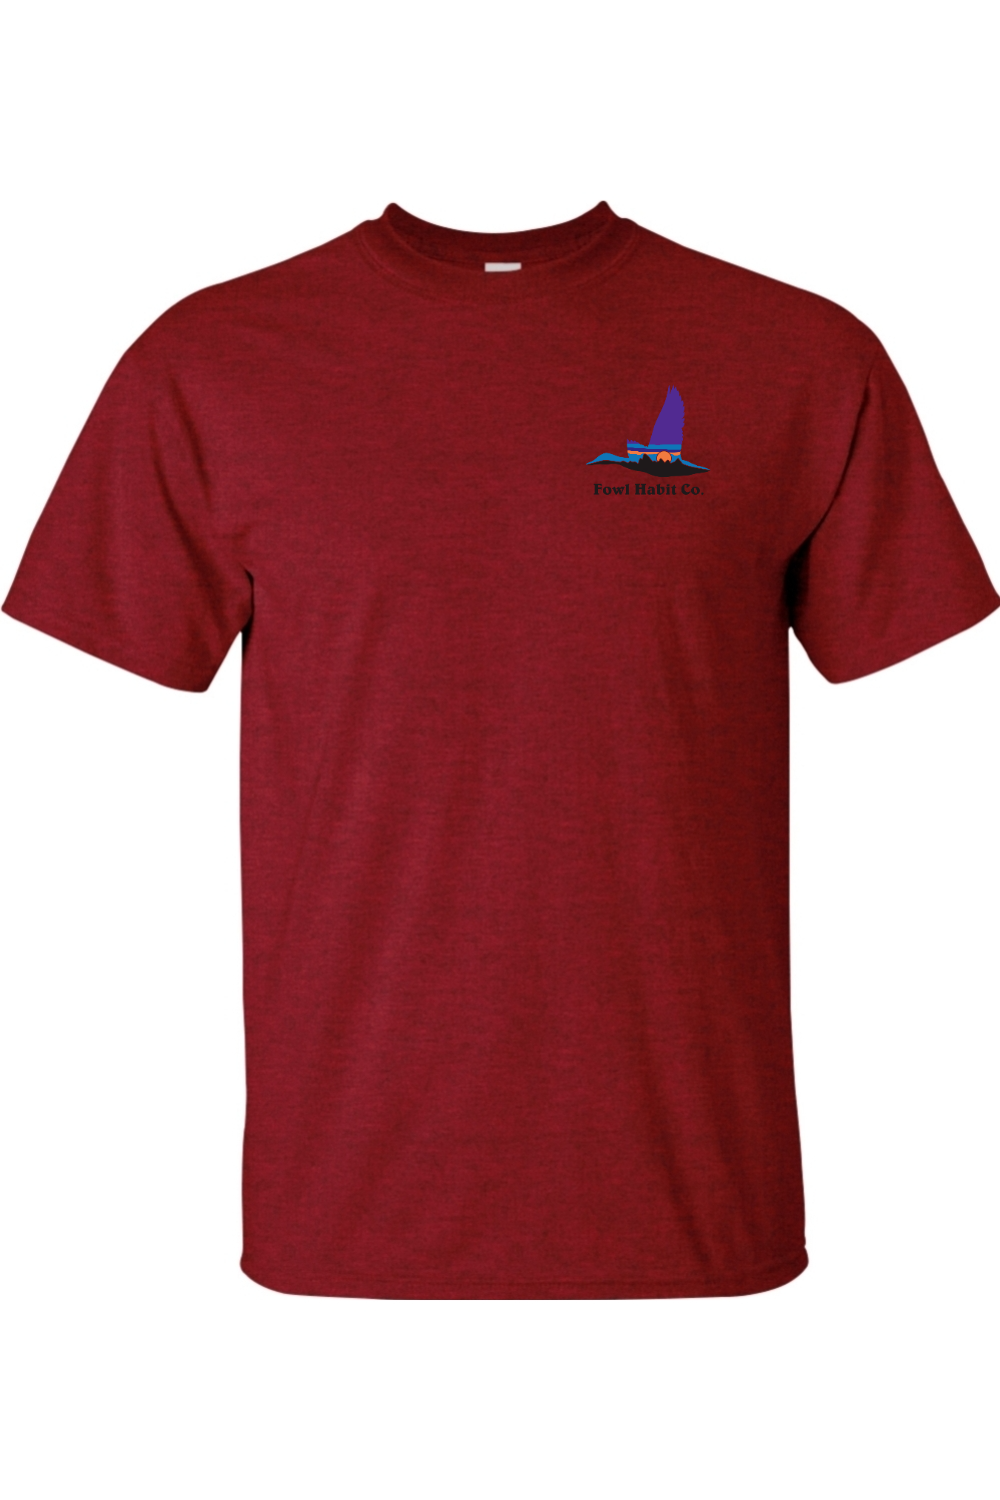 Sunset T-Shirt - Fowl Habit Co.